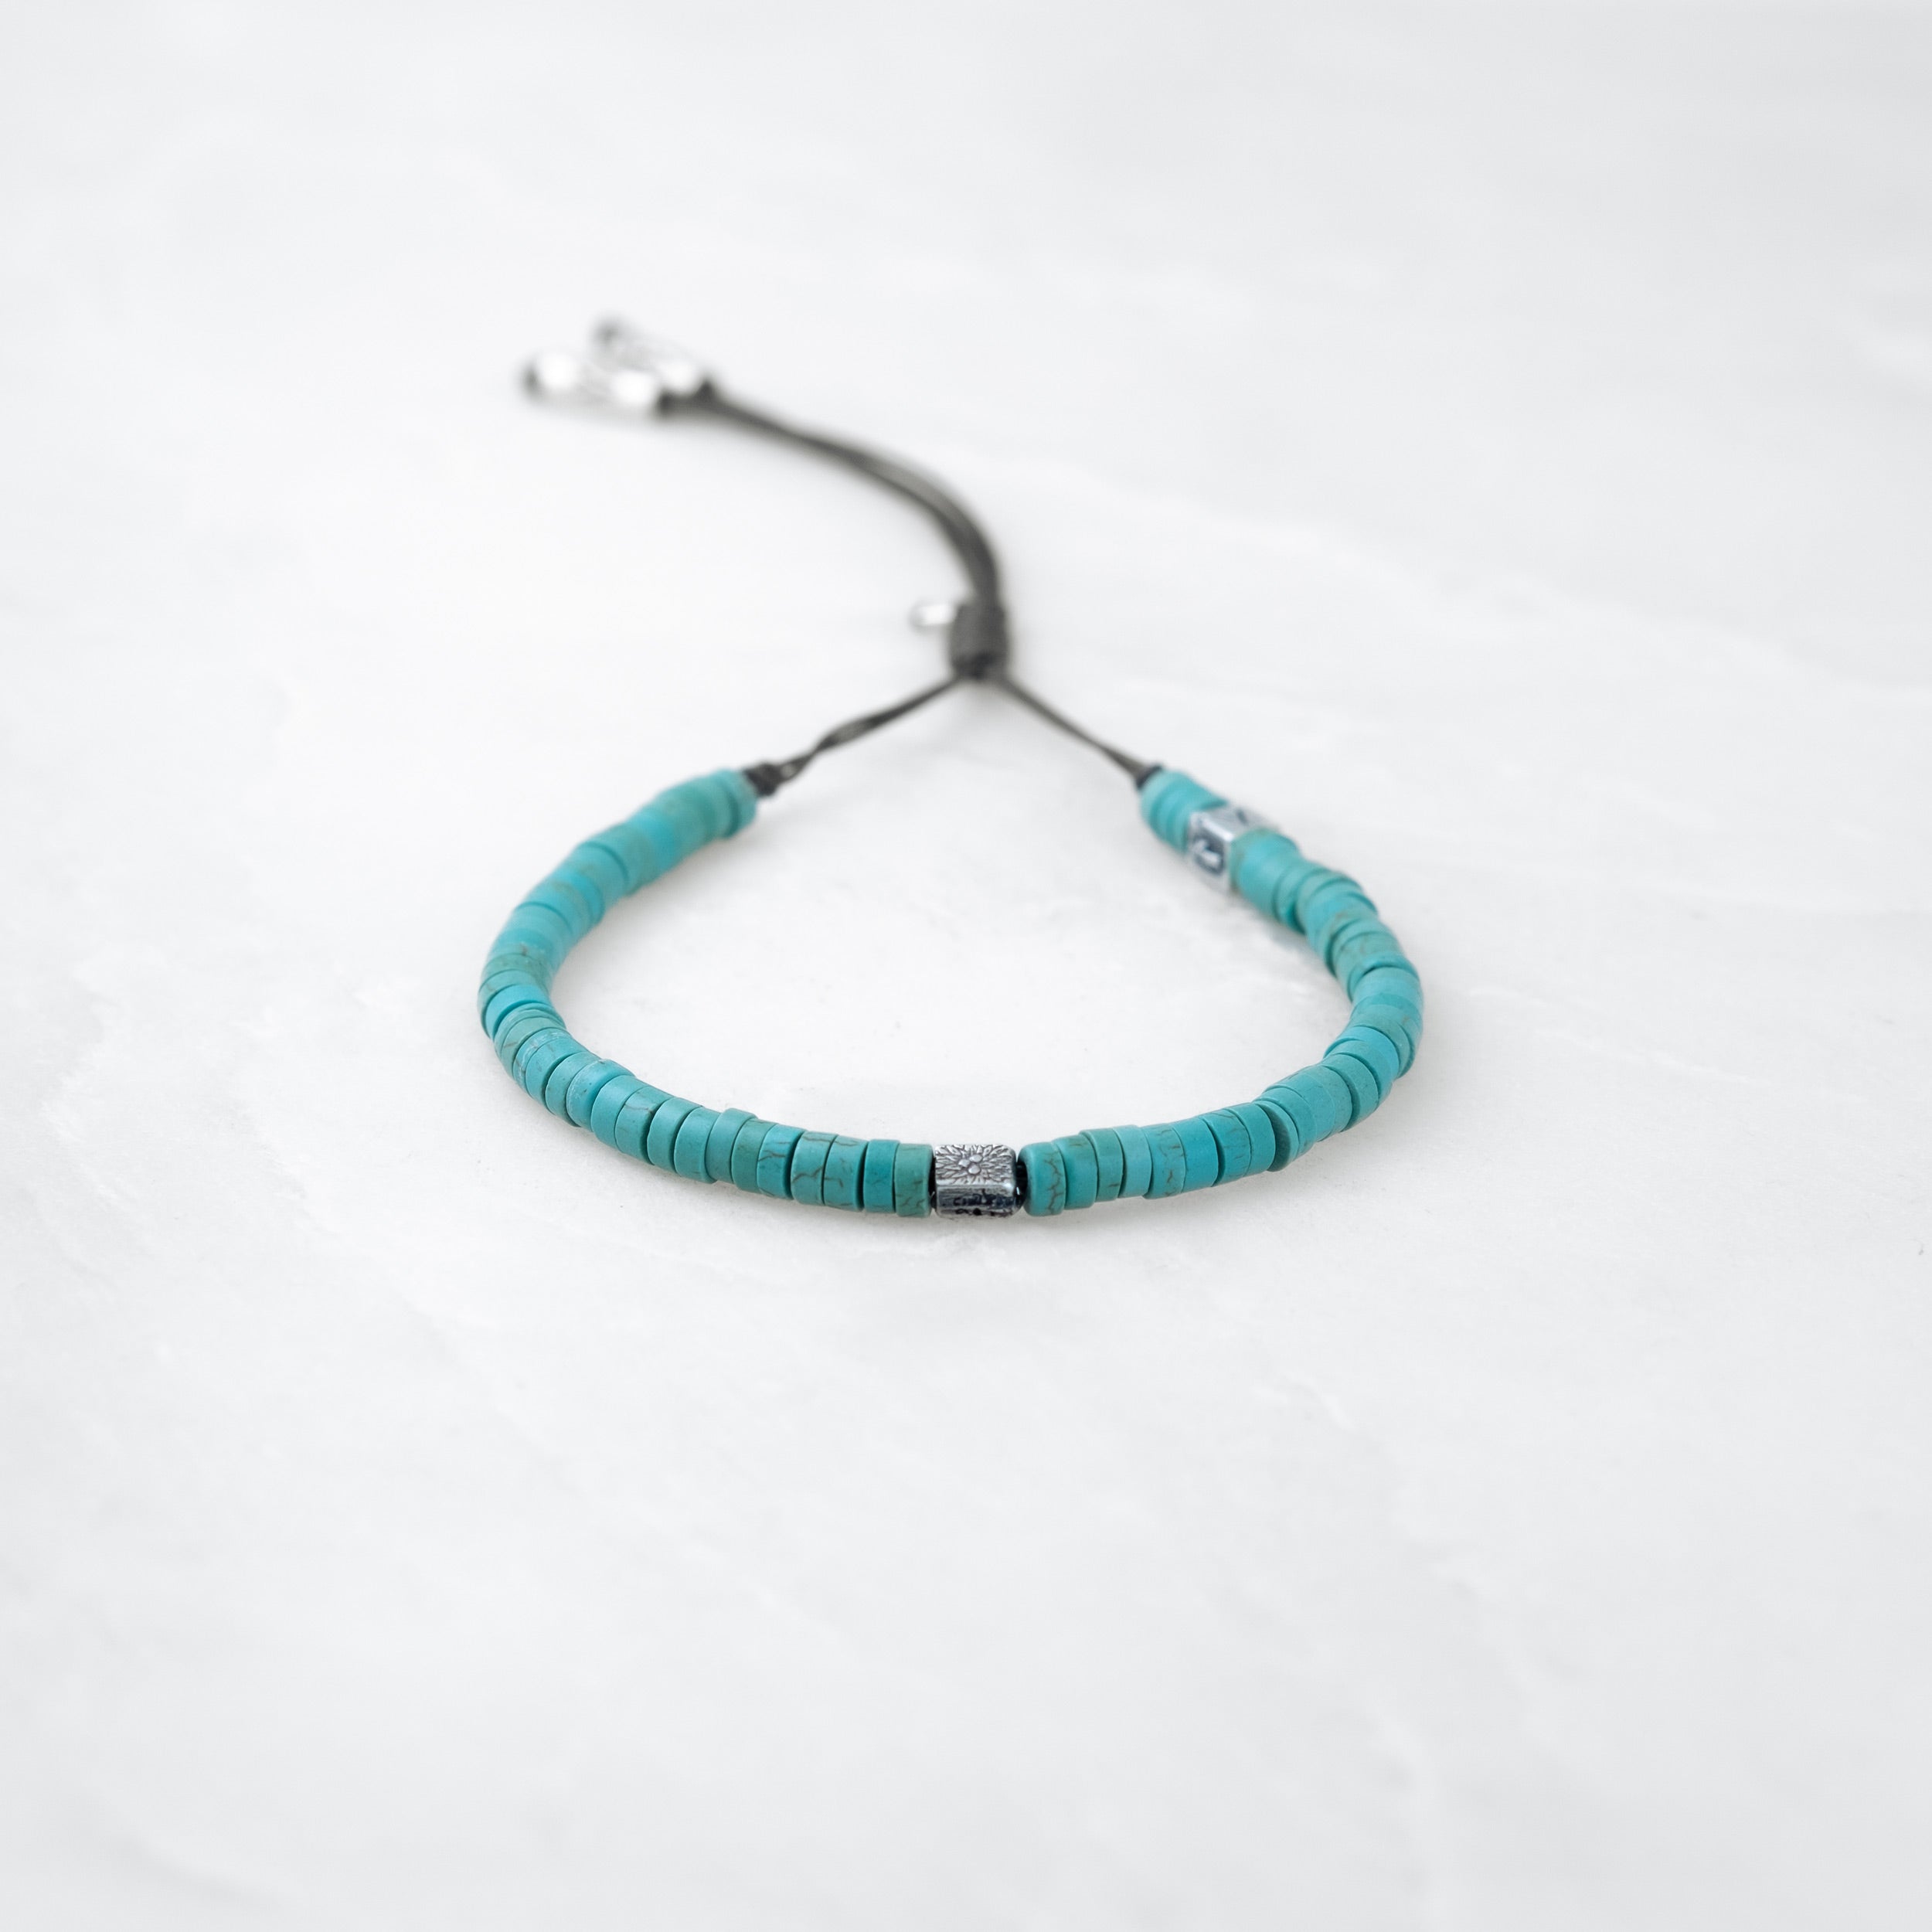 TIBET COLOR Bracelet - Turquoise, Silver Bodhi